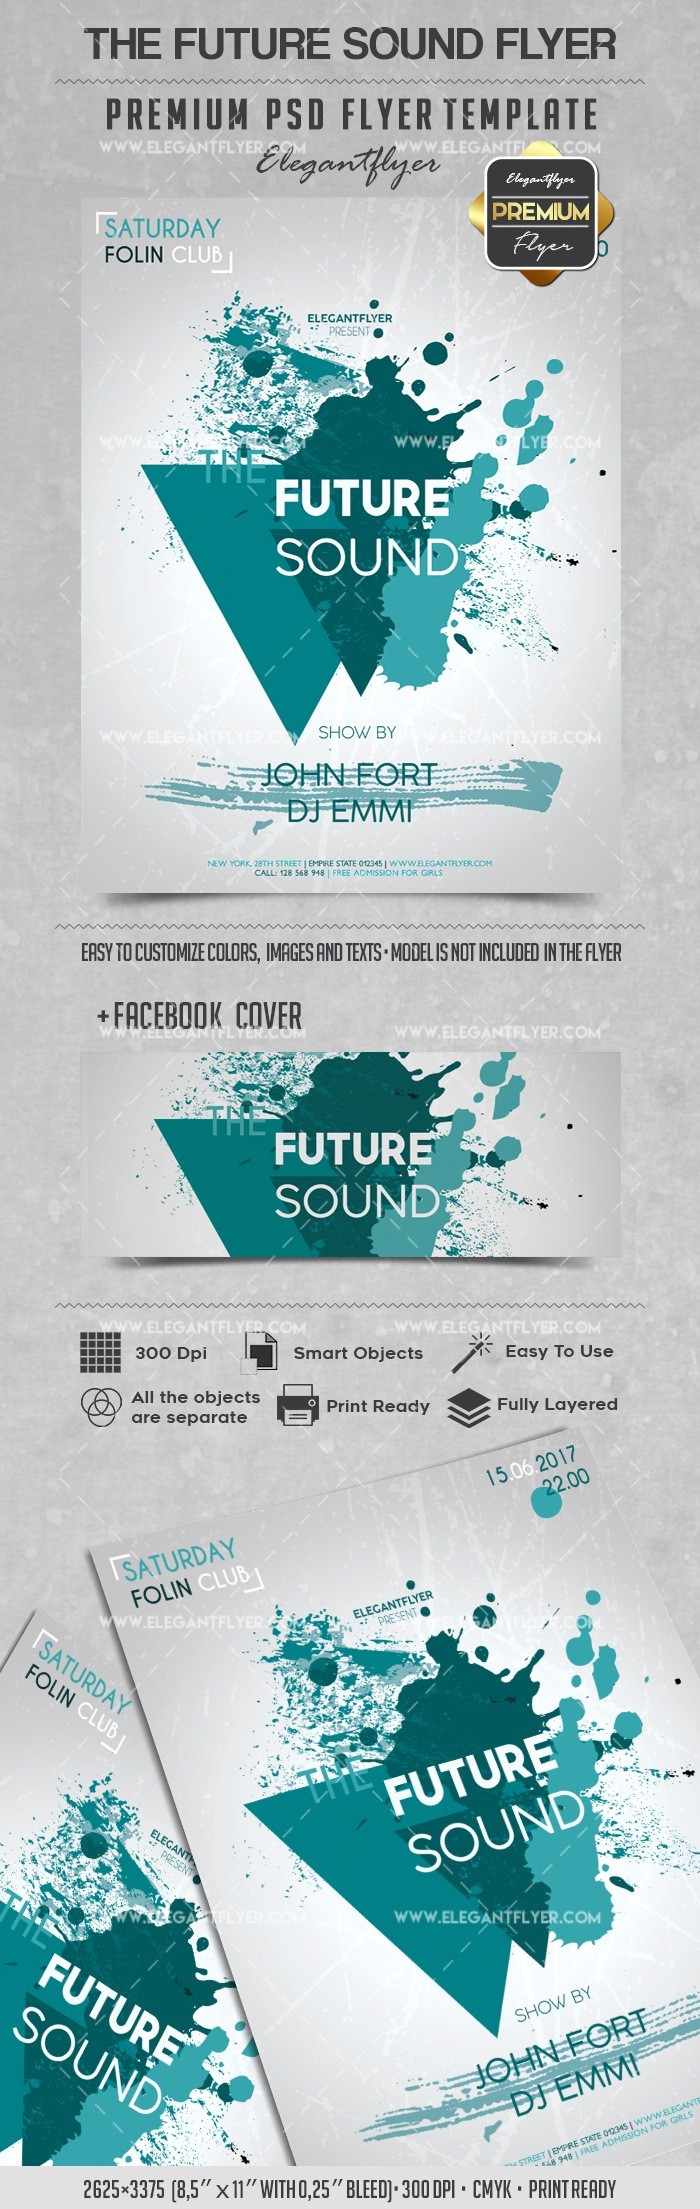 The Future Sound by ElegantFlyer